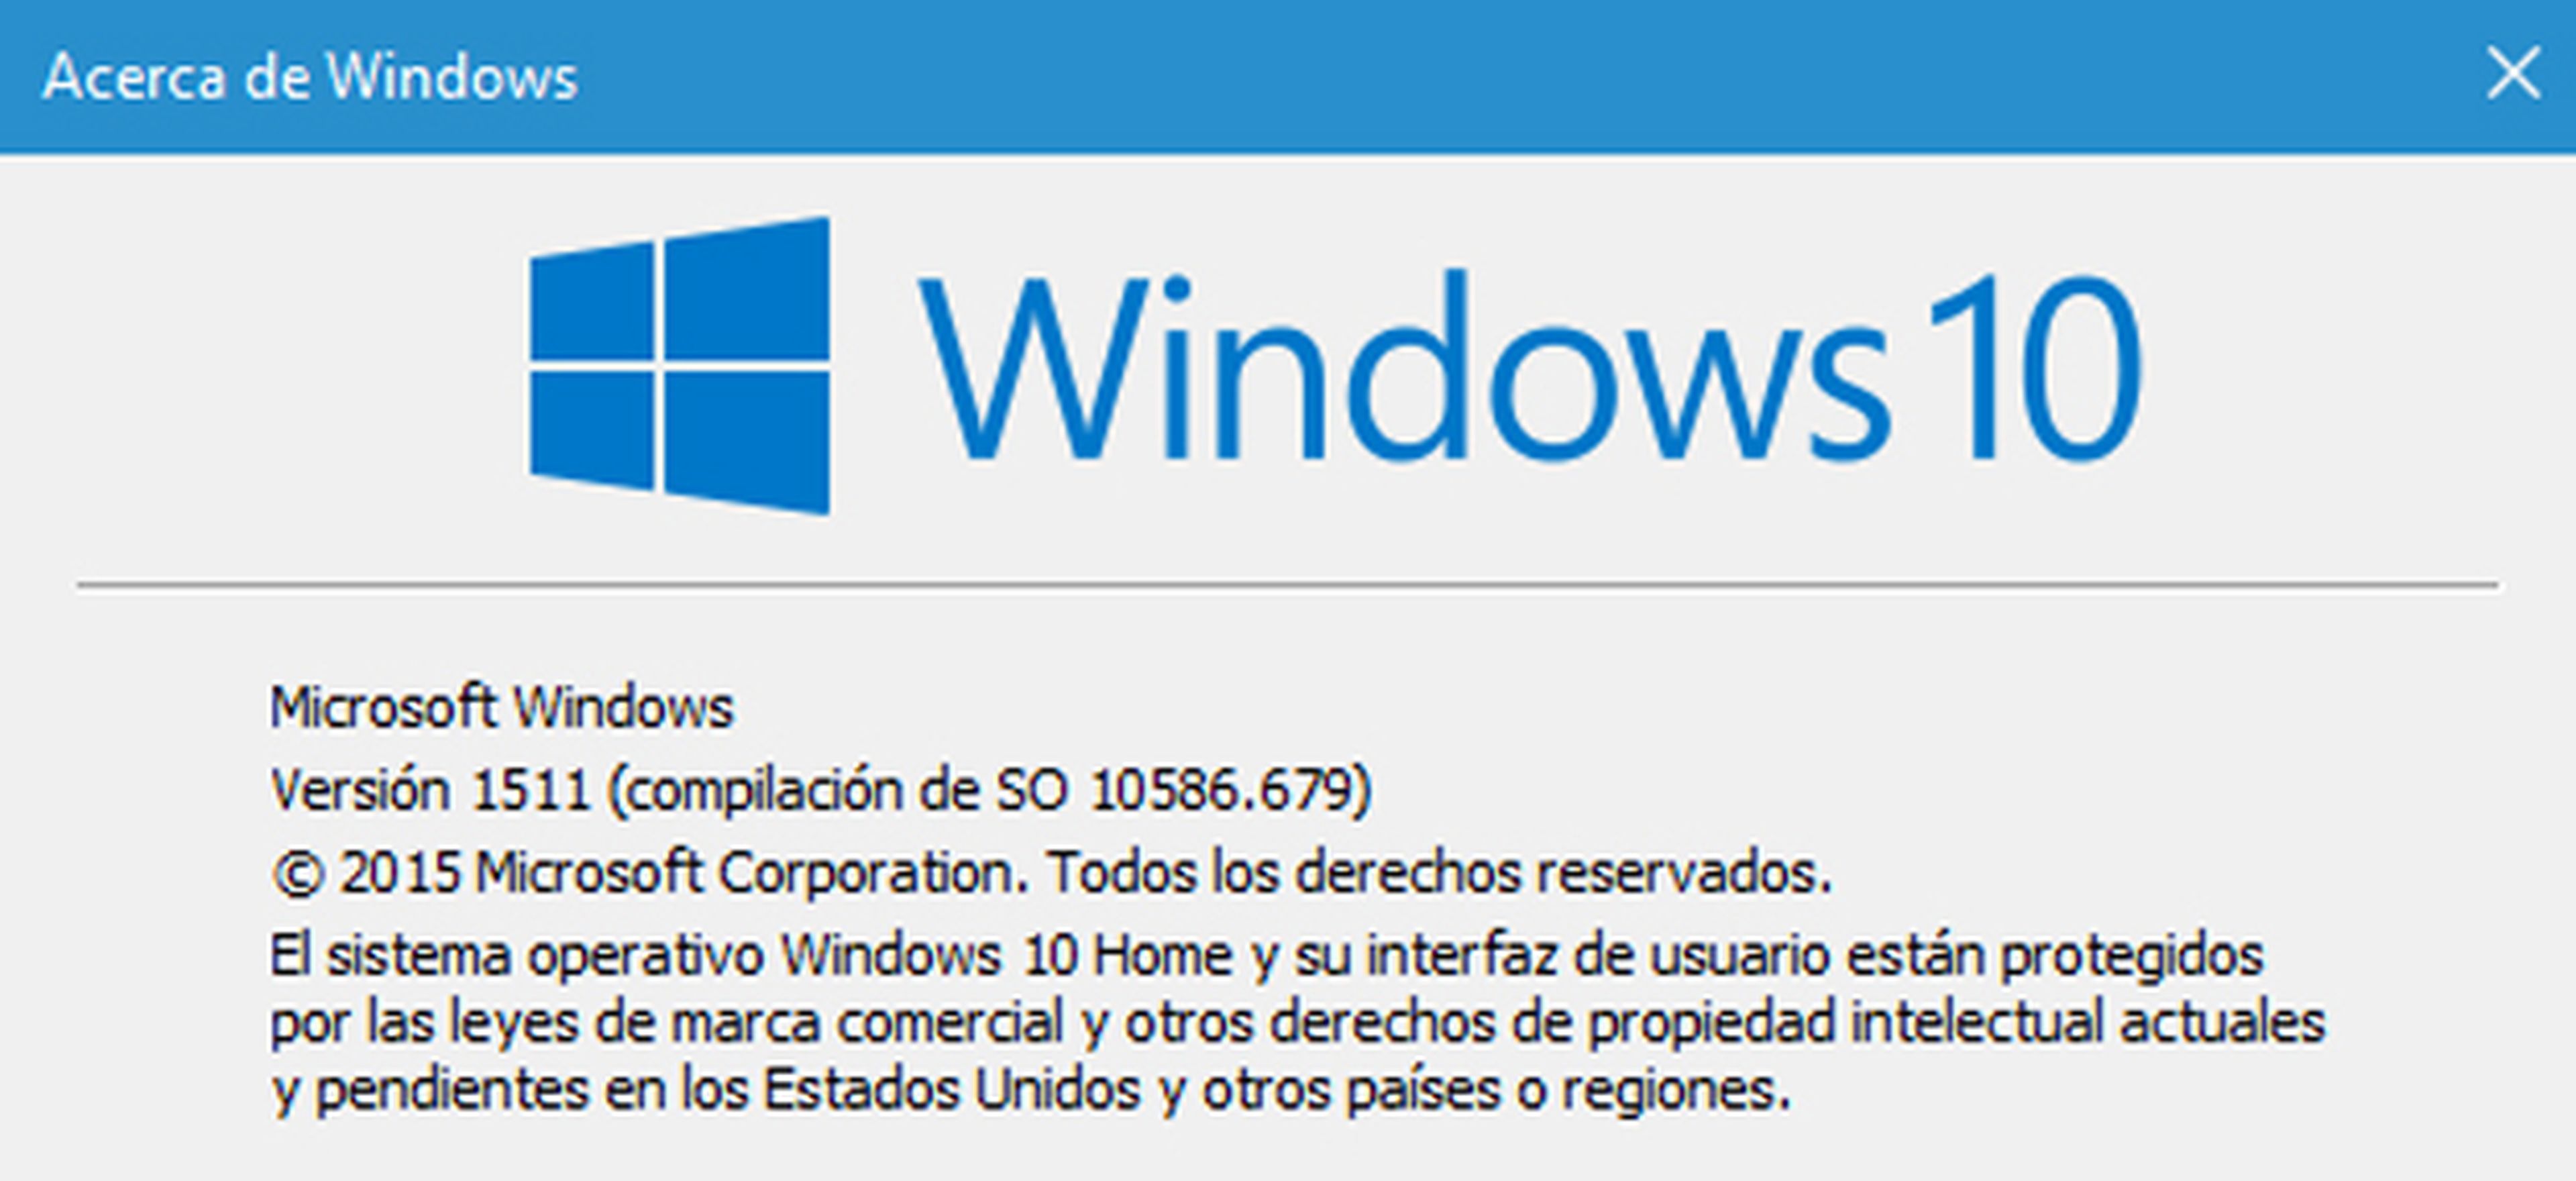 La ventana de Acerca de Windows 10